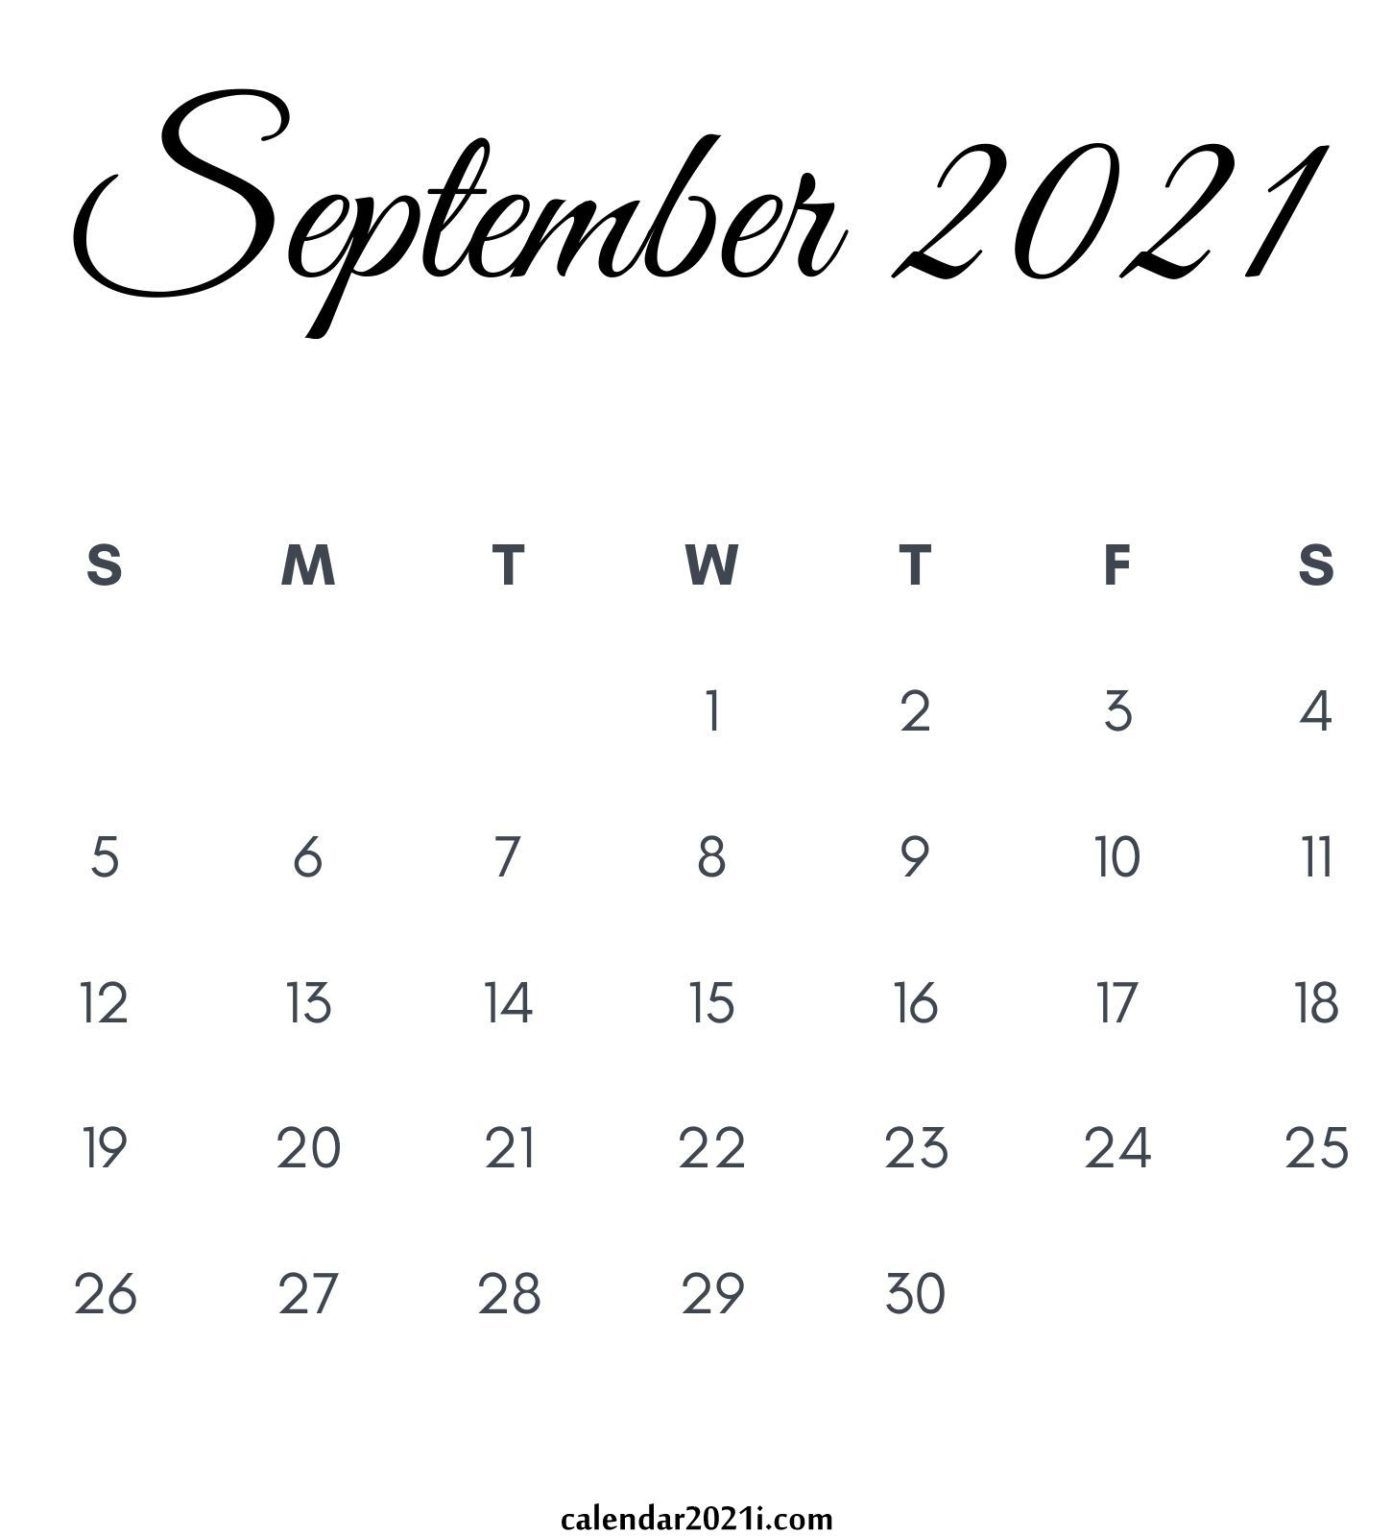 September 2021 Calendar Printable In 2020 | Monthly Calendar